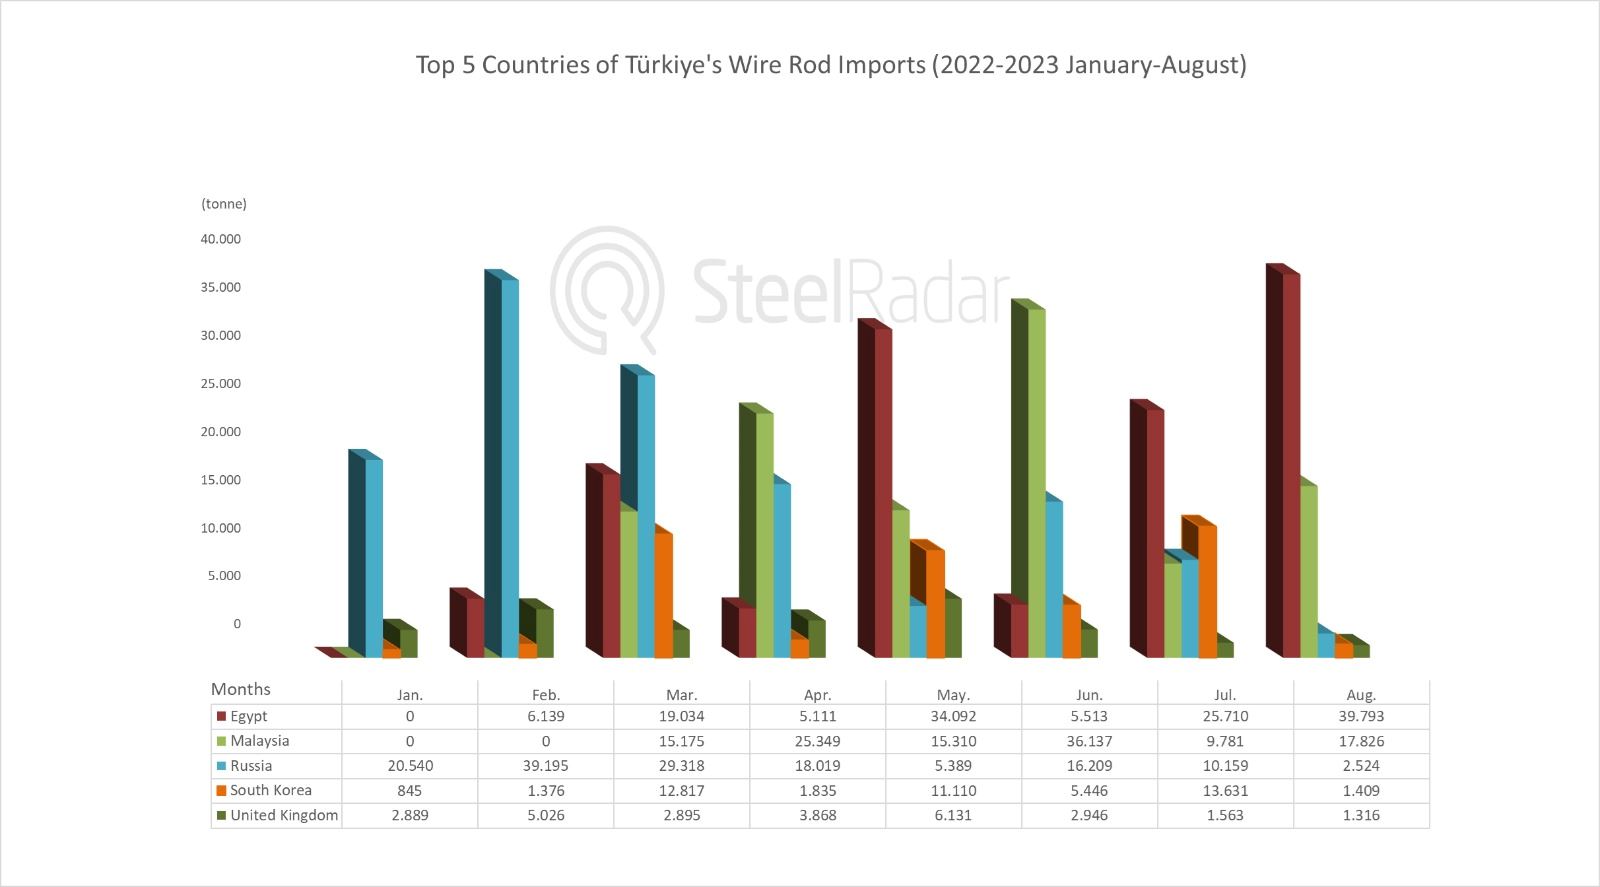 Türkiye's leading 5 countries in wire rod imports